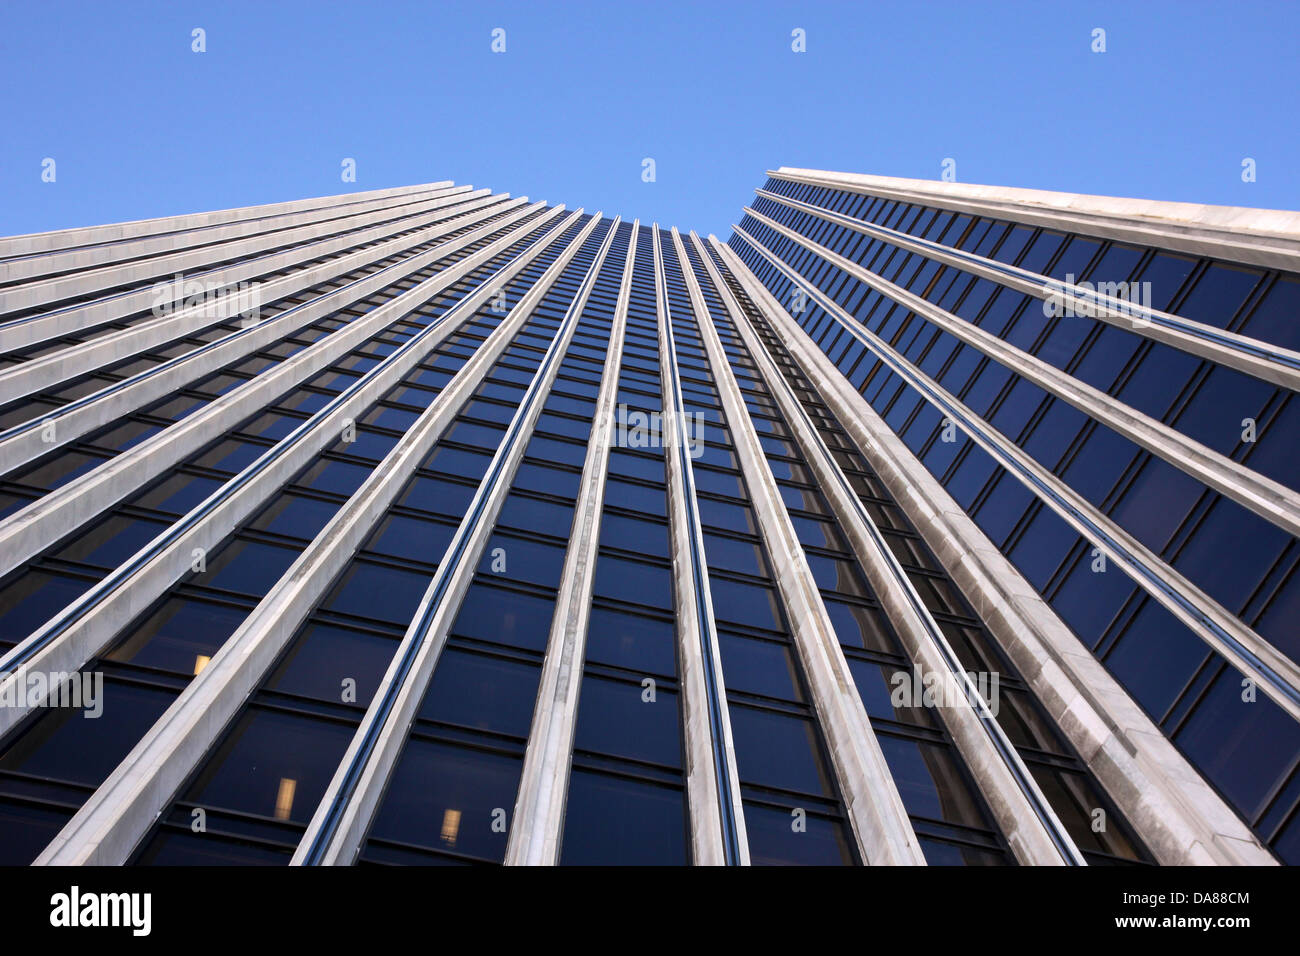 Sehen Sie die Fassade der Albanys Landmark Bürgermeister Erastus Corning Tower. Stockfoto